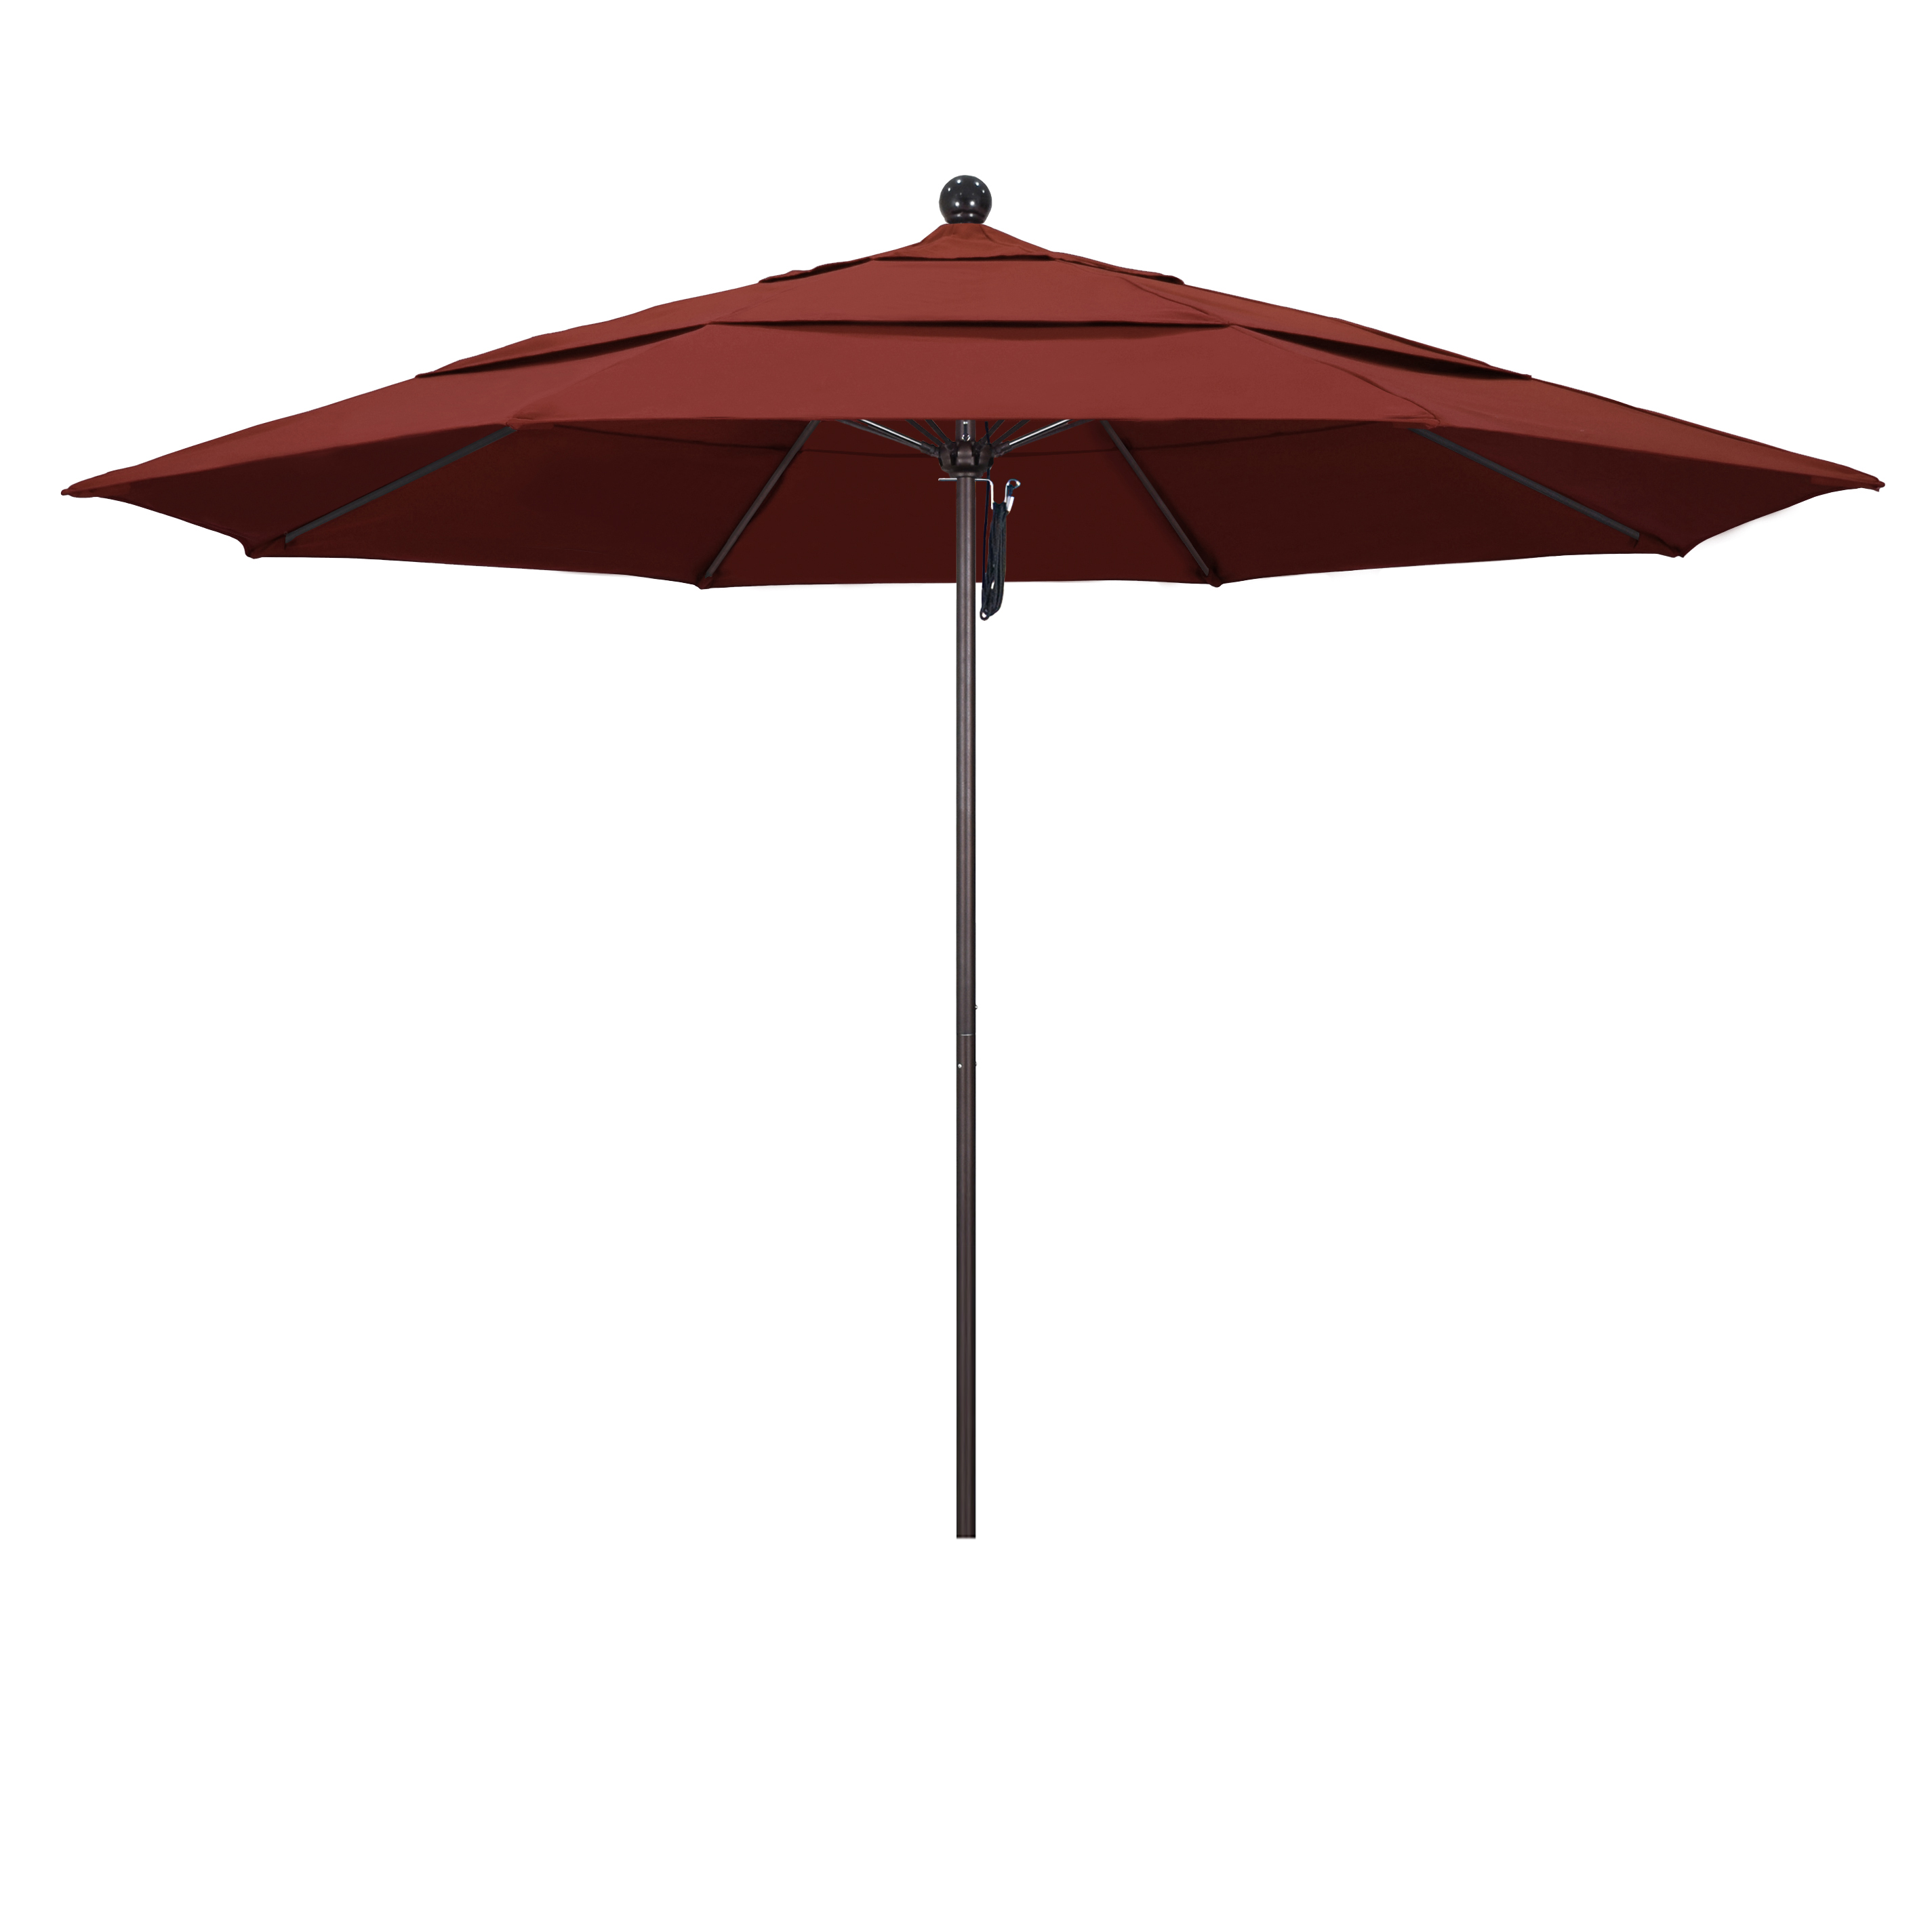 Picture of California Umbrella ALTO118117-5407-DWV 11 ft. Fiberglass Pulley Open Double Vents Market Umbrella - Bronze and Sunbrella-Henna